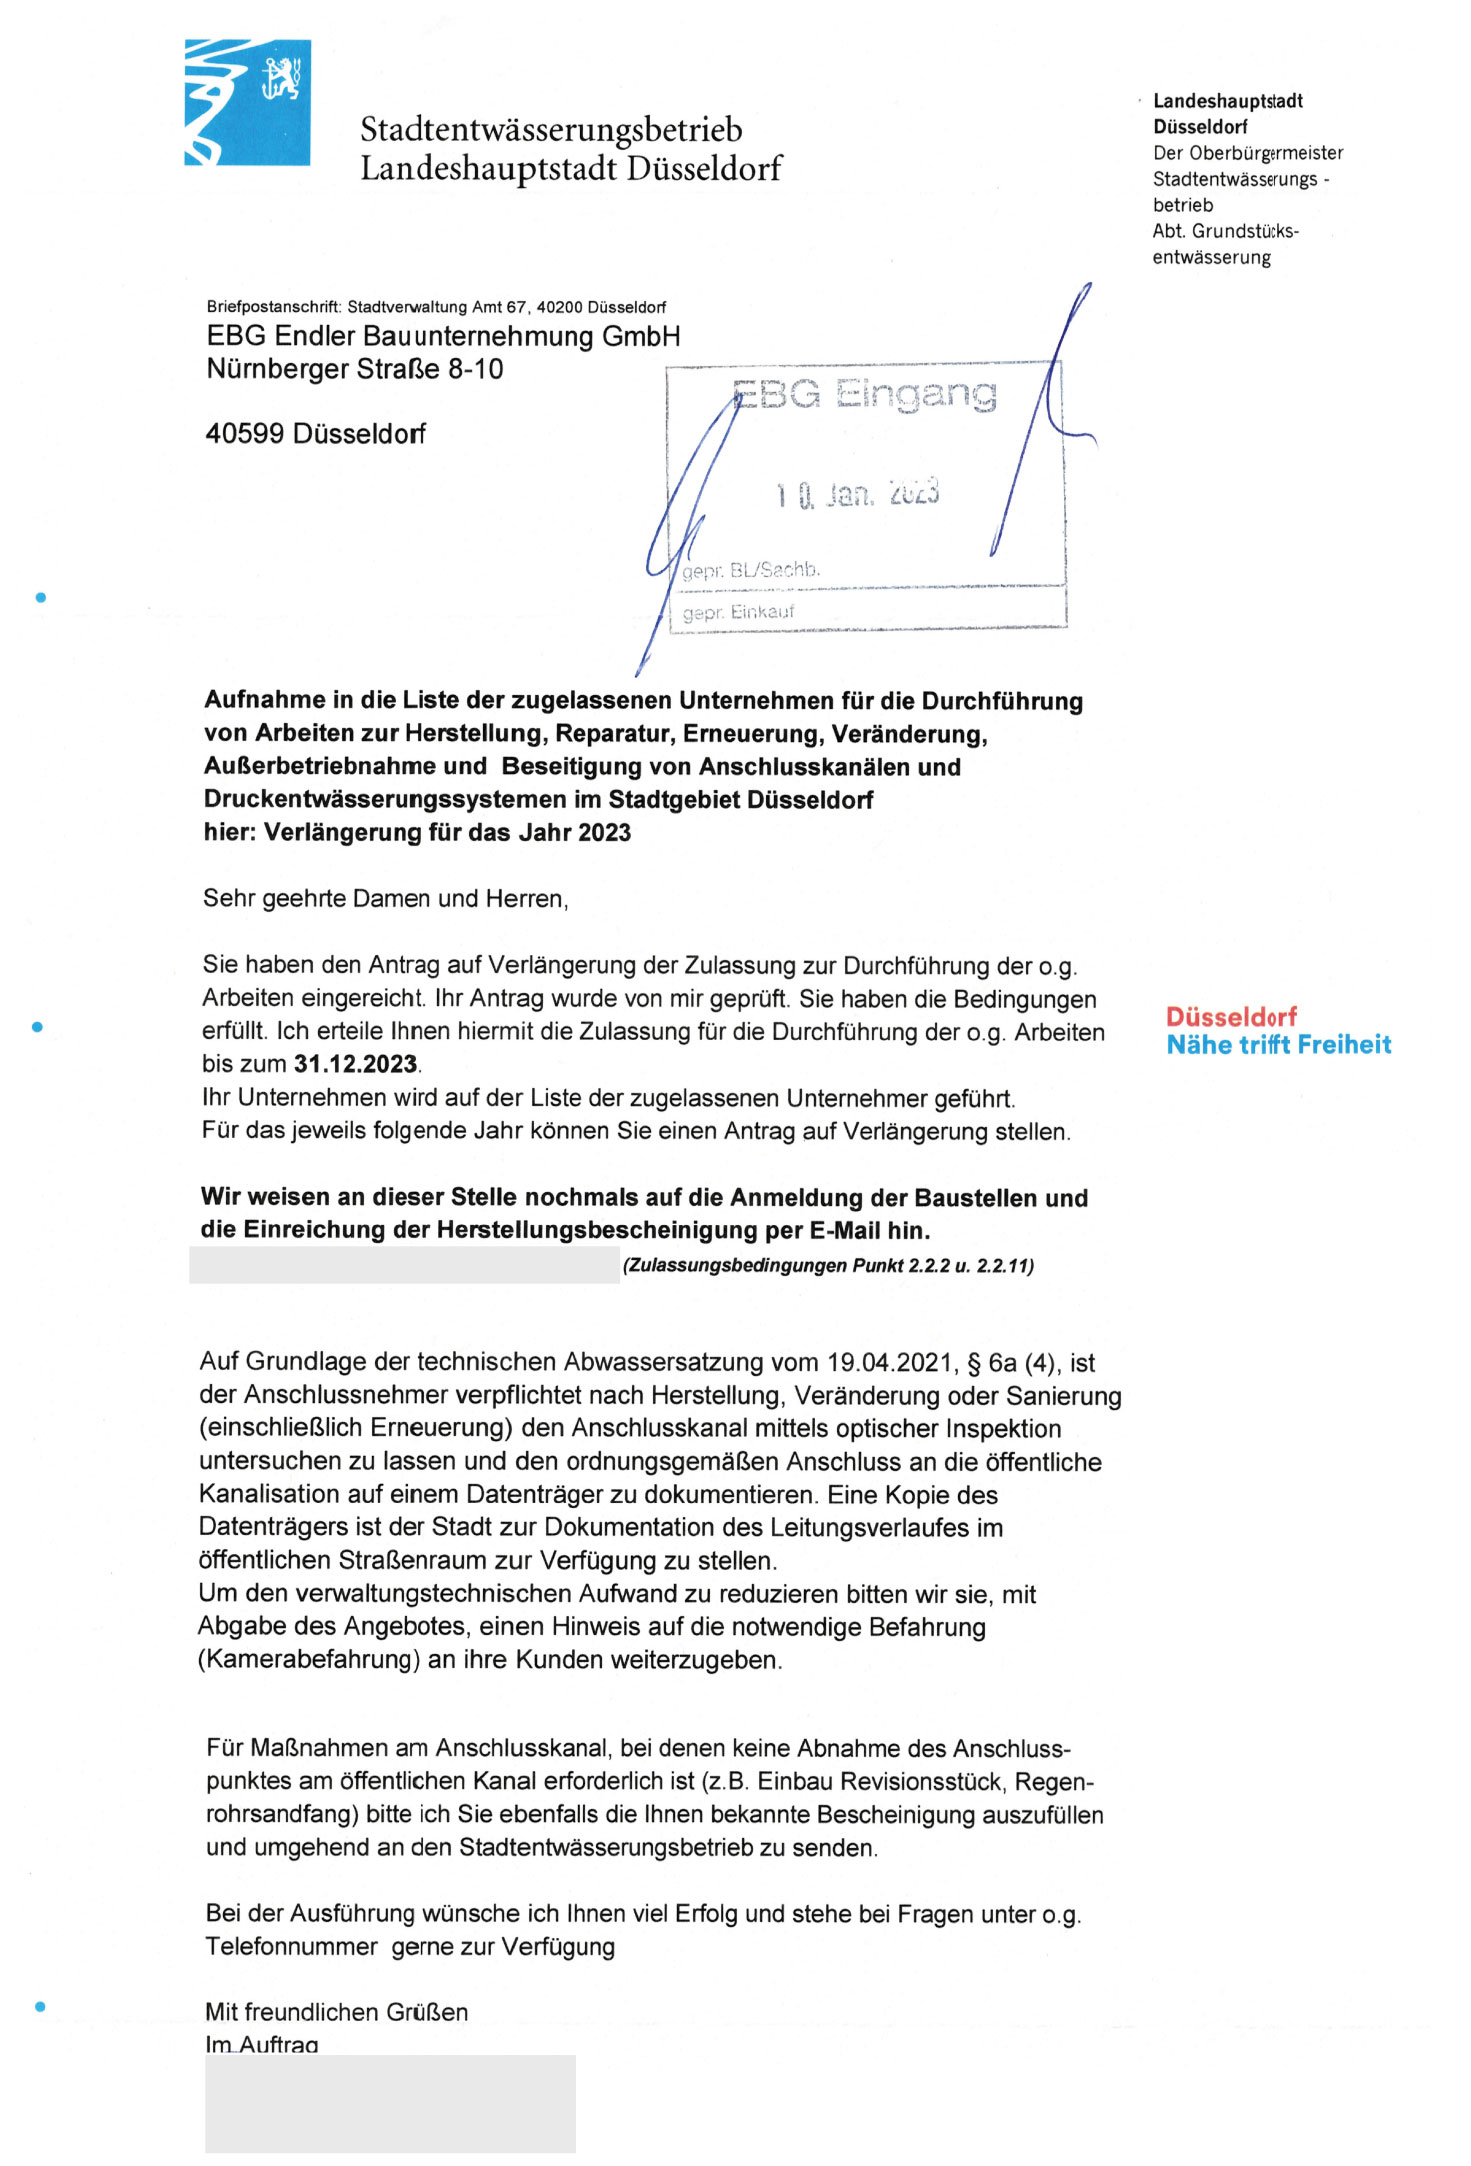 EBG Zertifikat - Zulassung Anschlusskanäle Düsseldorf 2023